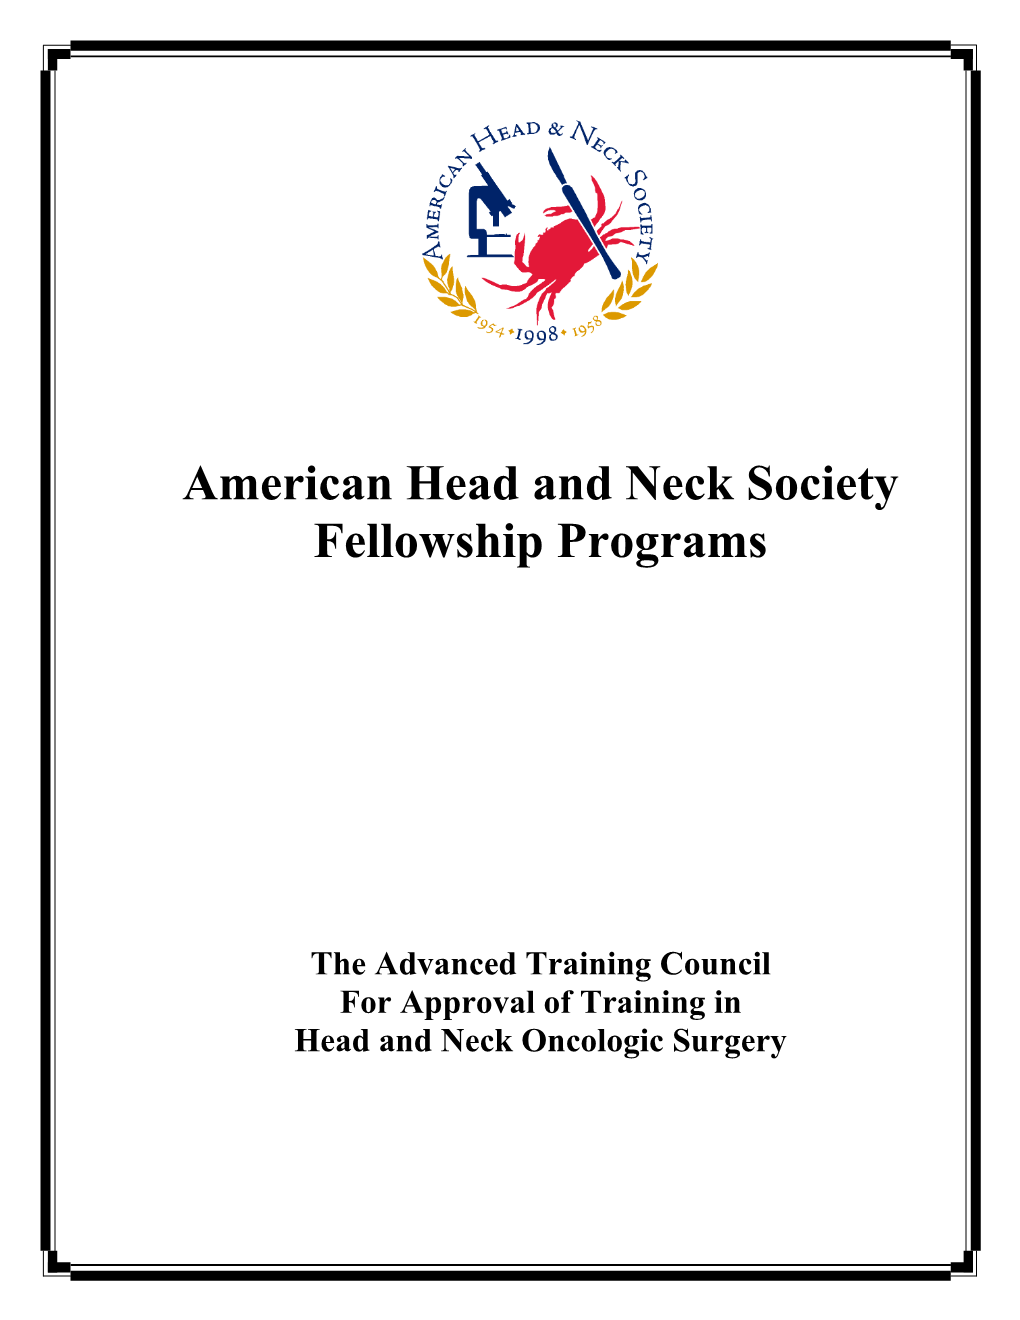 American Head and Neck Society Fellowship Programs